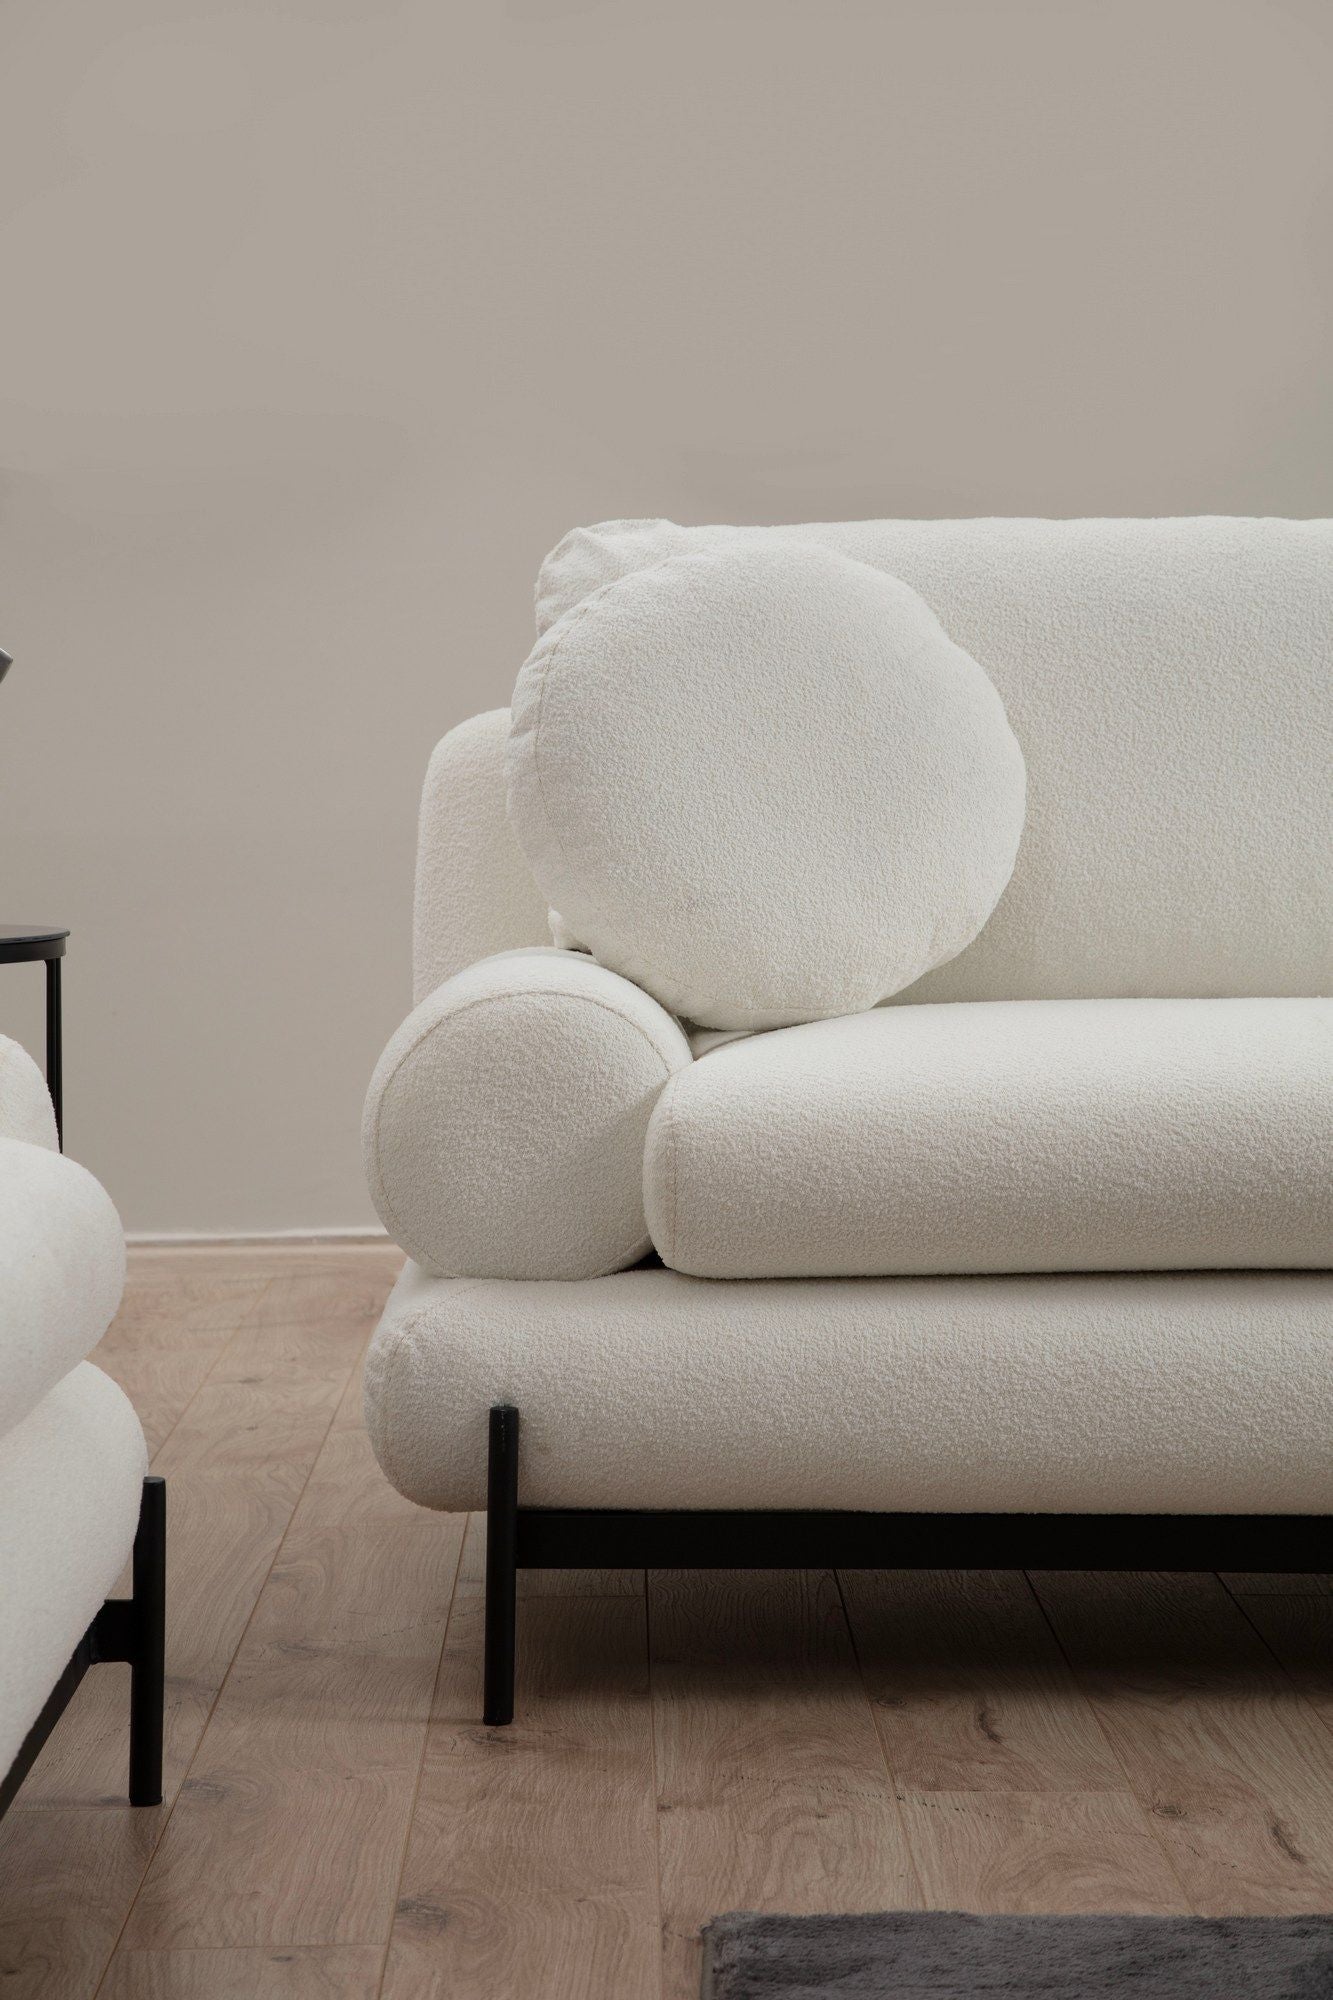 Livorno - Hvid - 2-sæders sofa